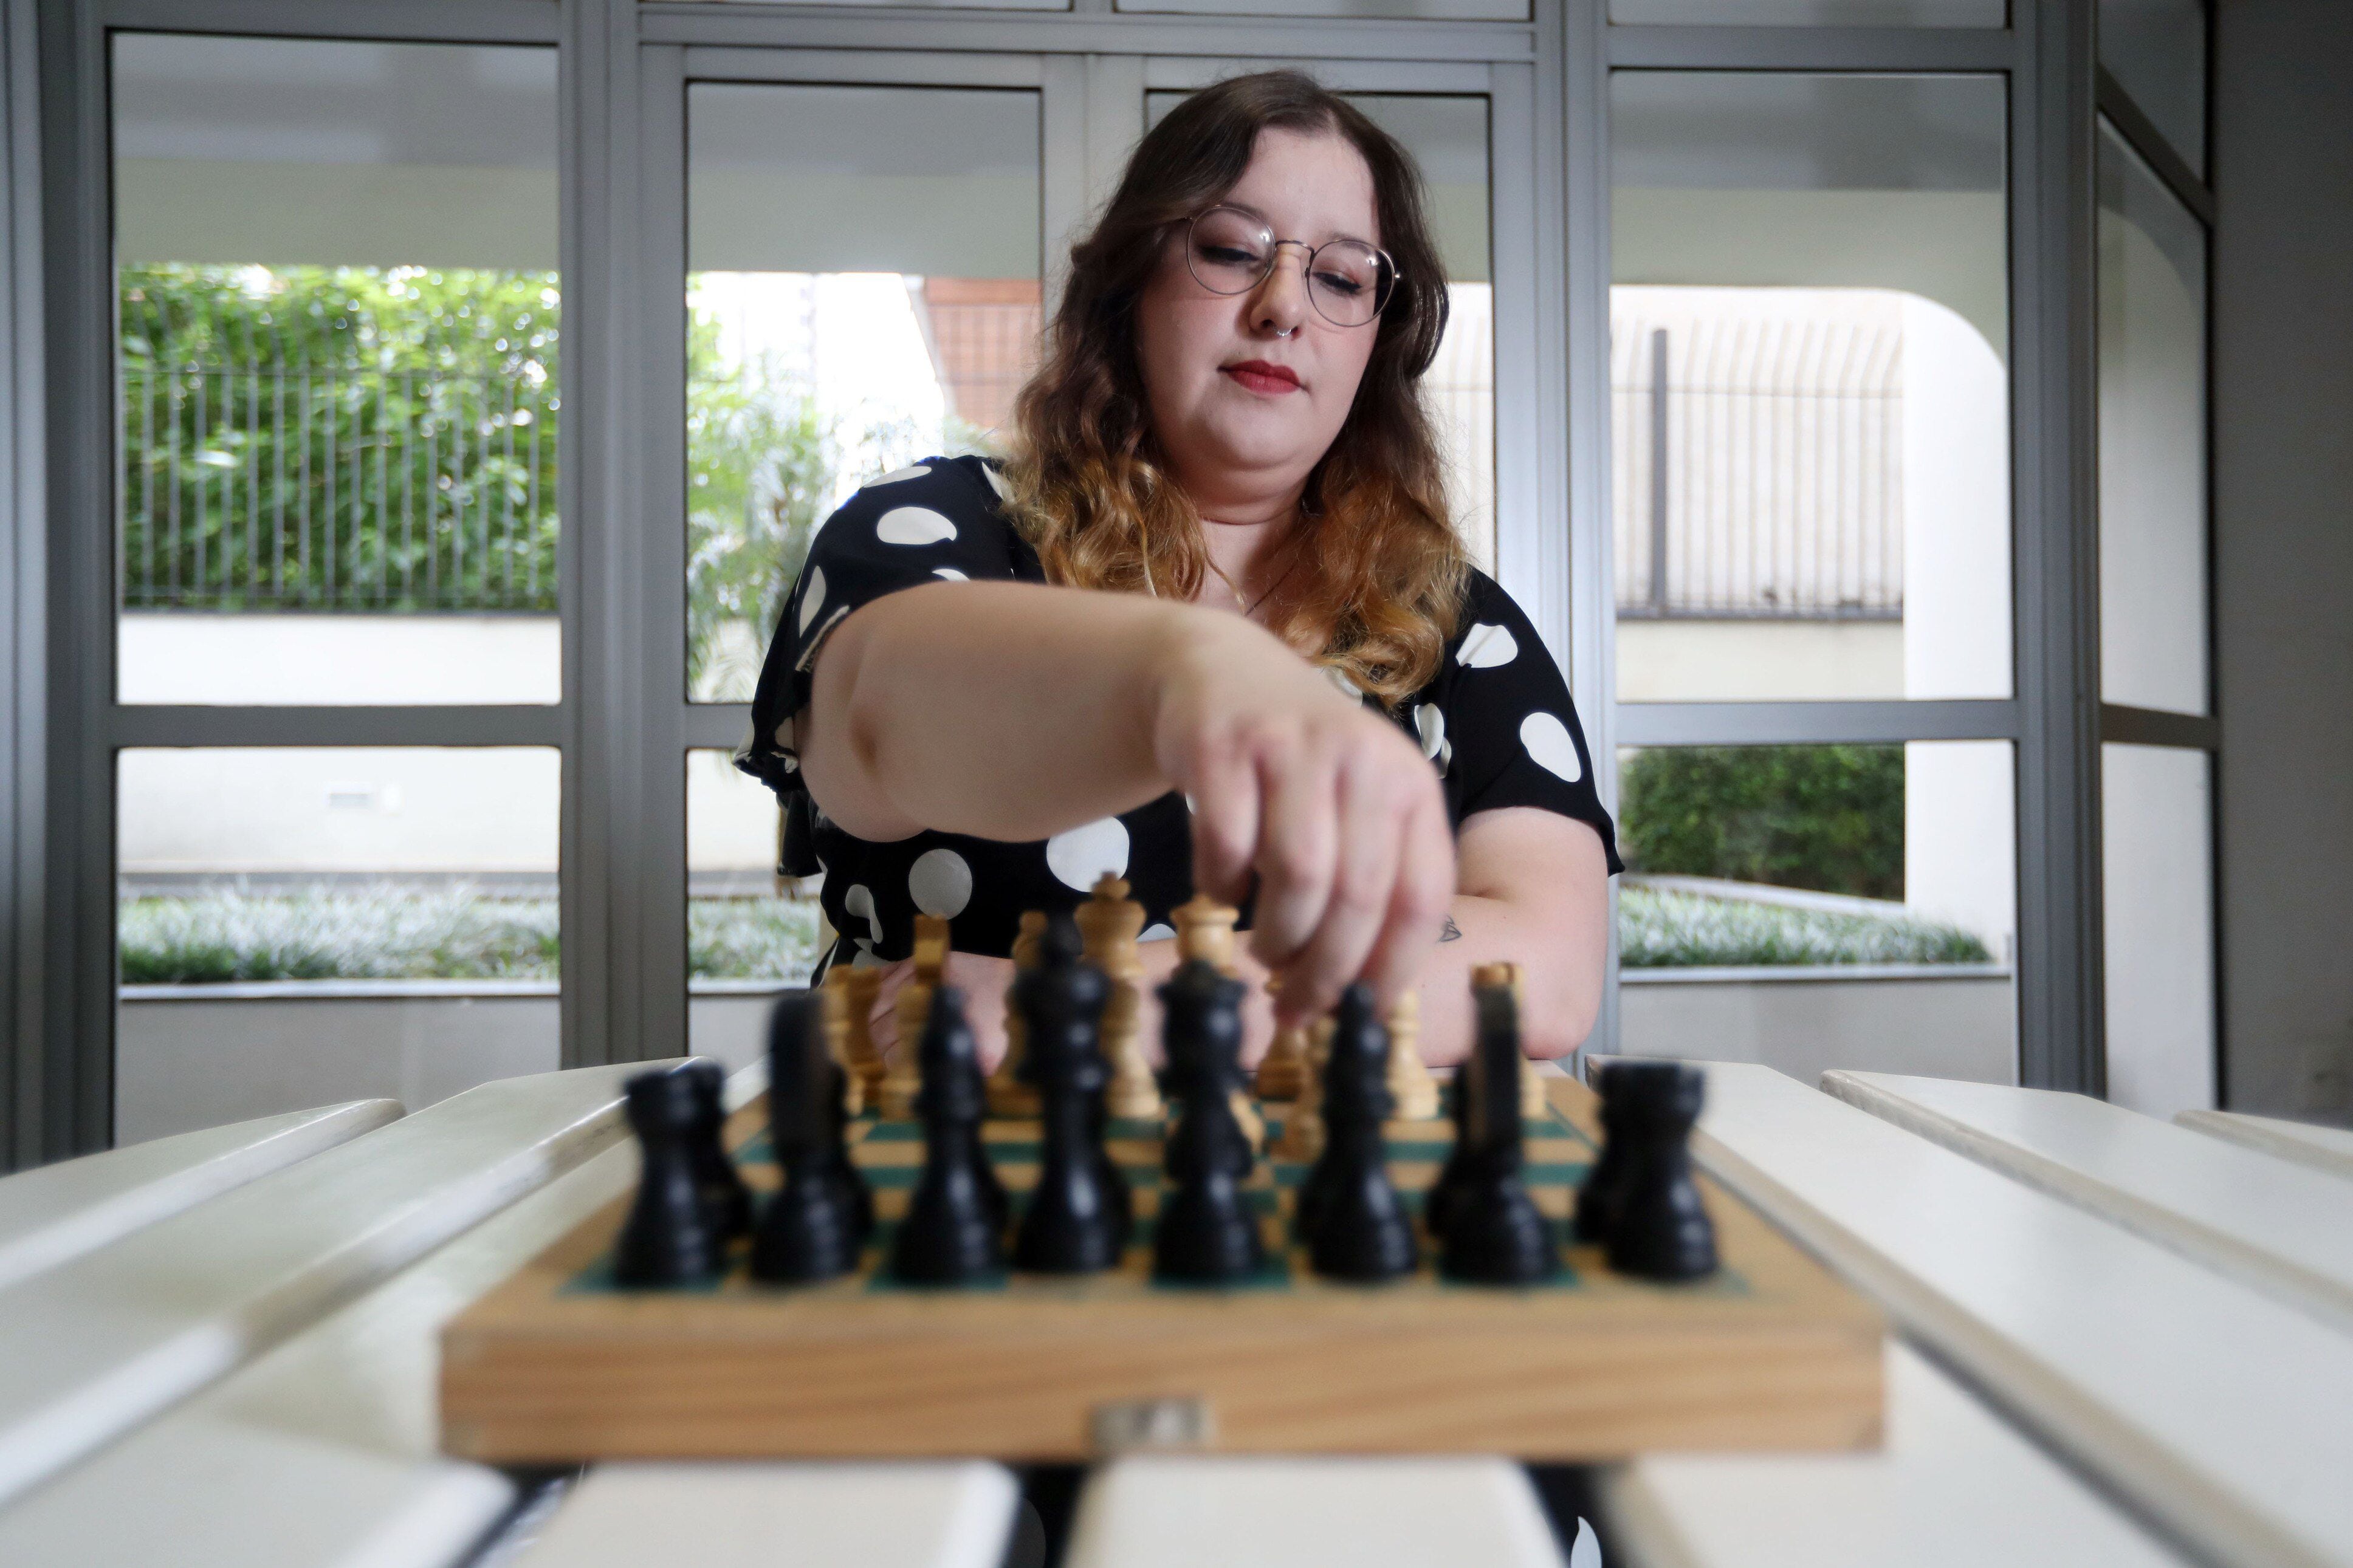 O Gambito da Rainha': Melhor jogadora de xadrez do Brasil analisa